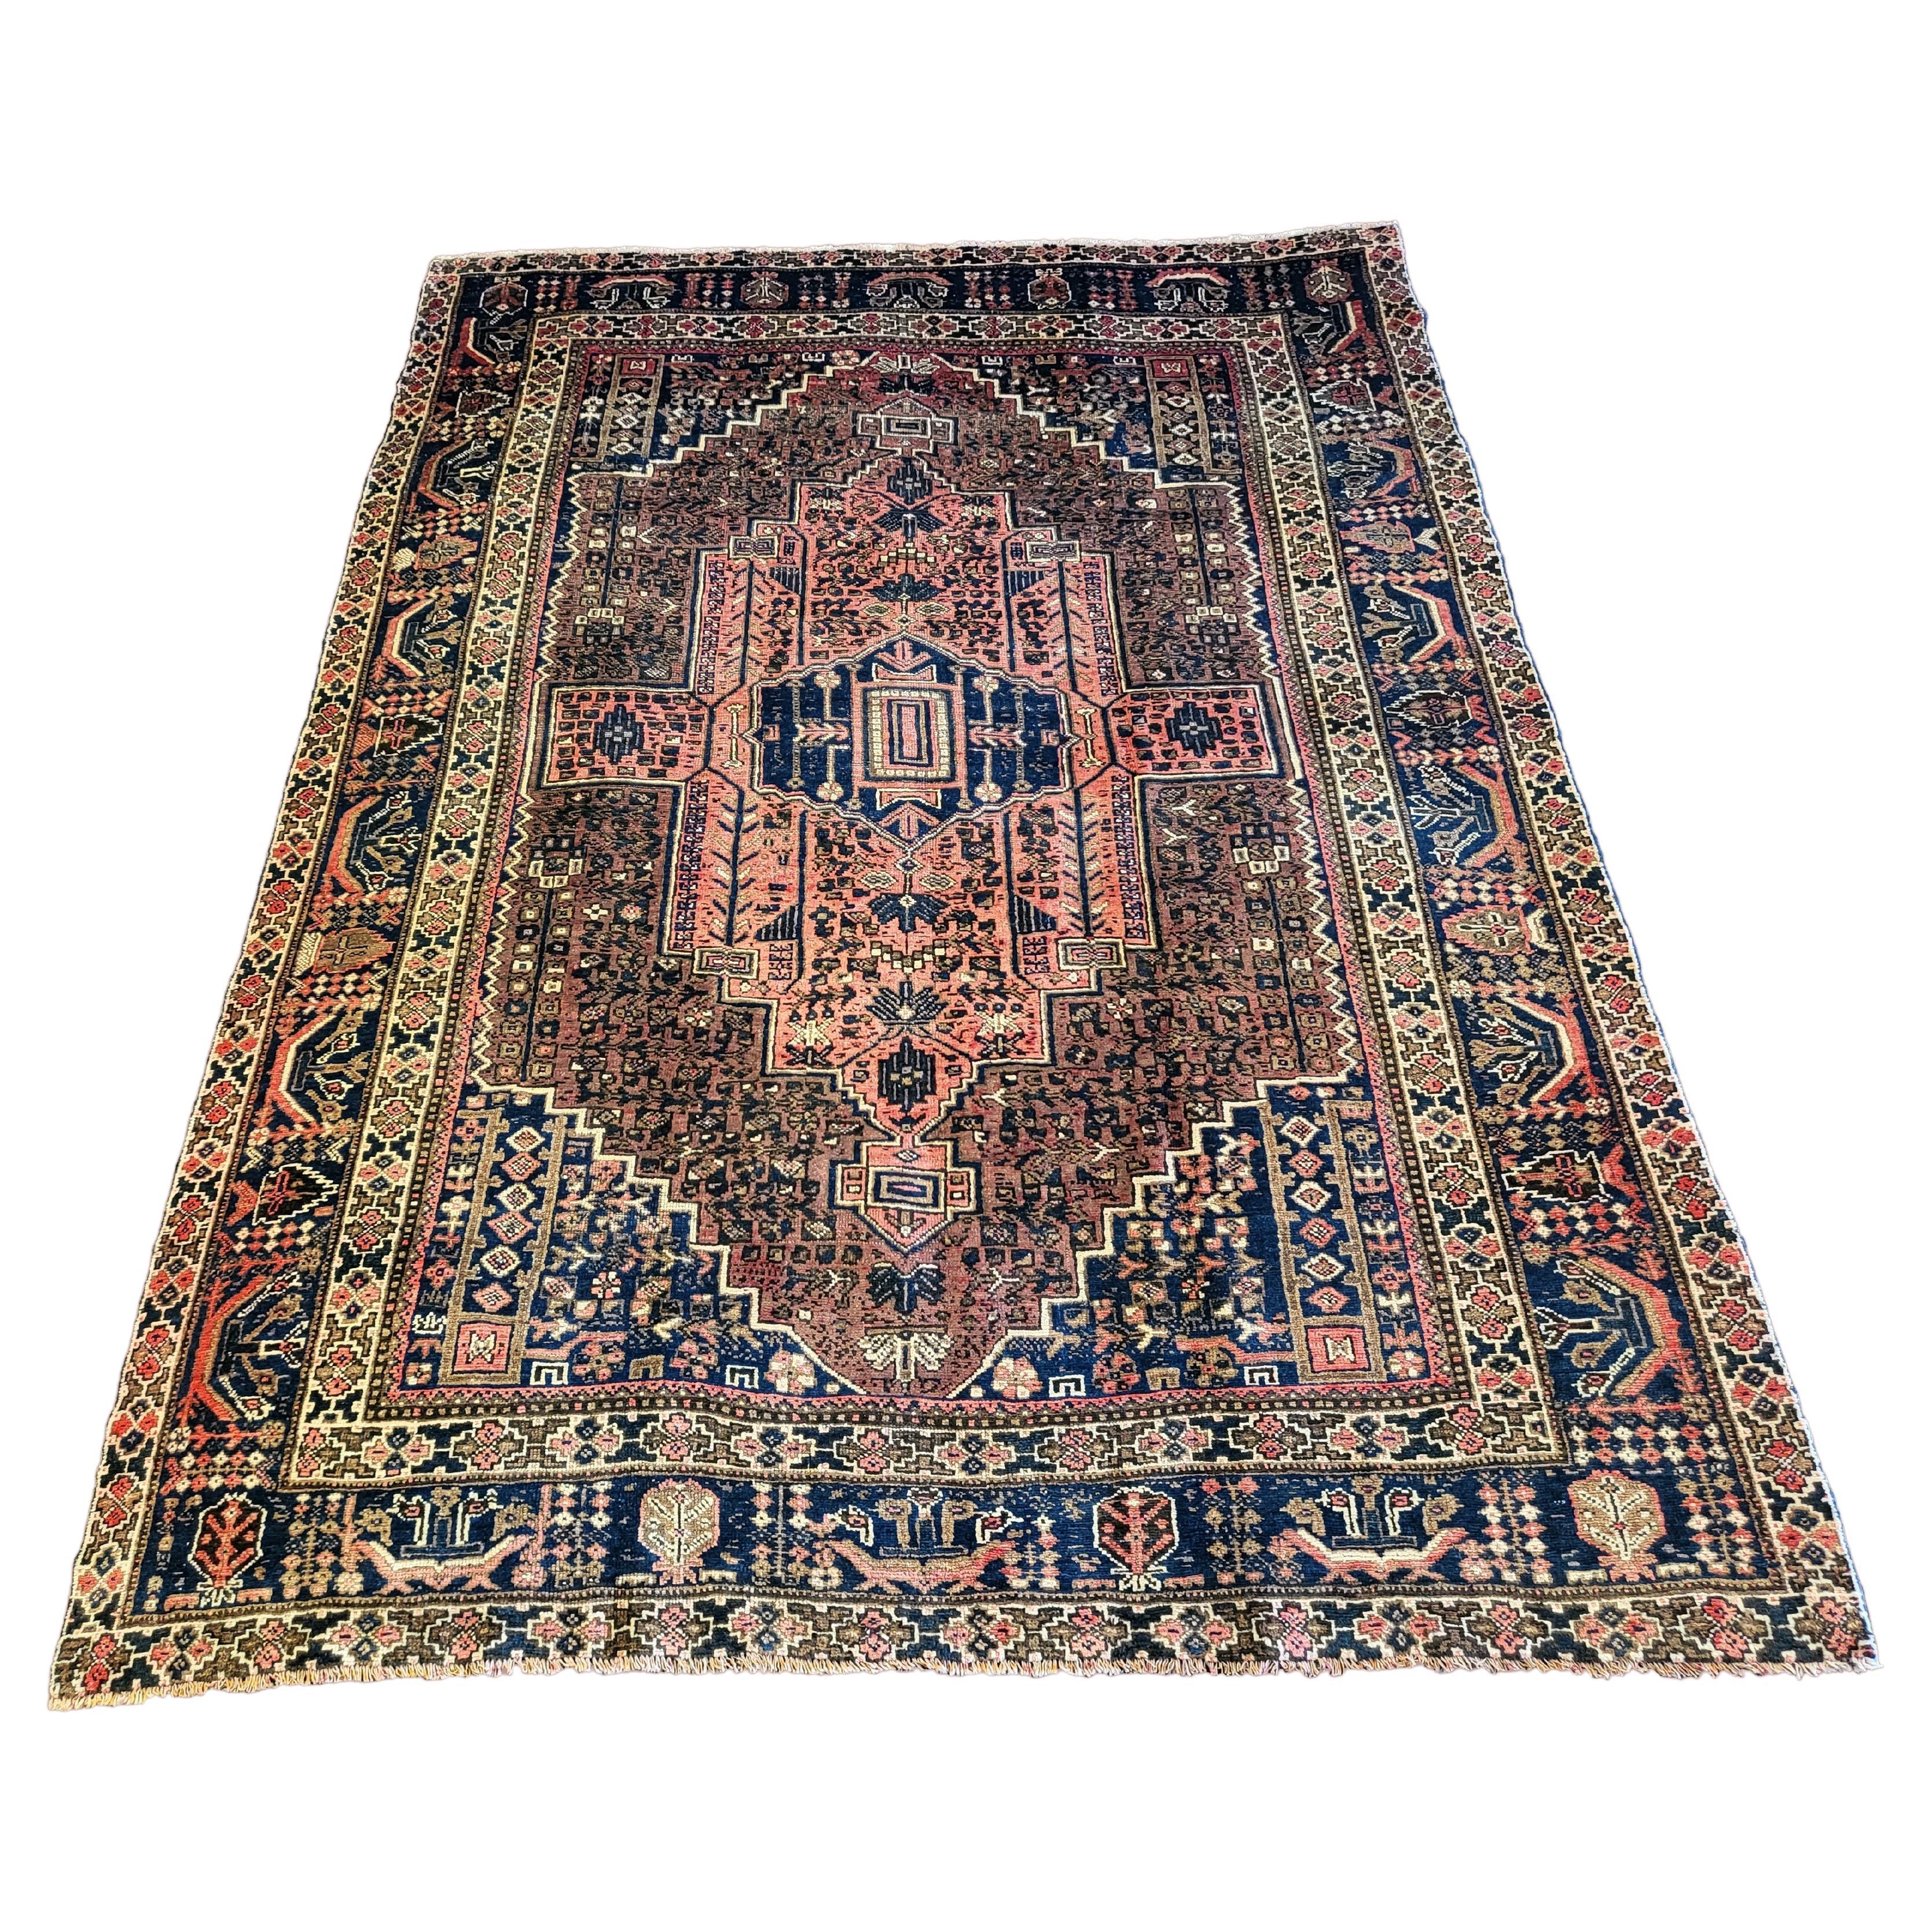 Ancient Shiraz / Qashqai - Geometric Tribal Persian Rug, PRG Exclusive For Sale